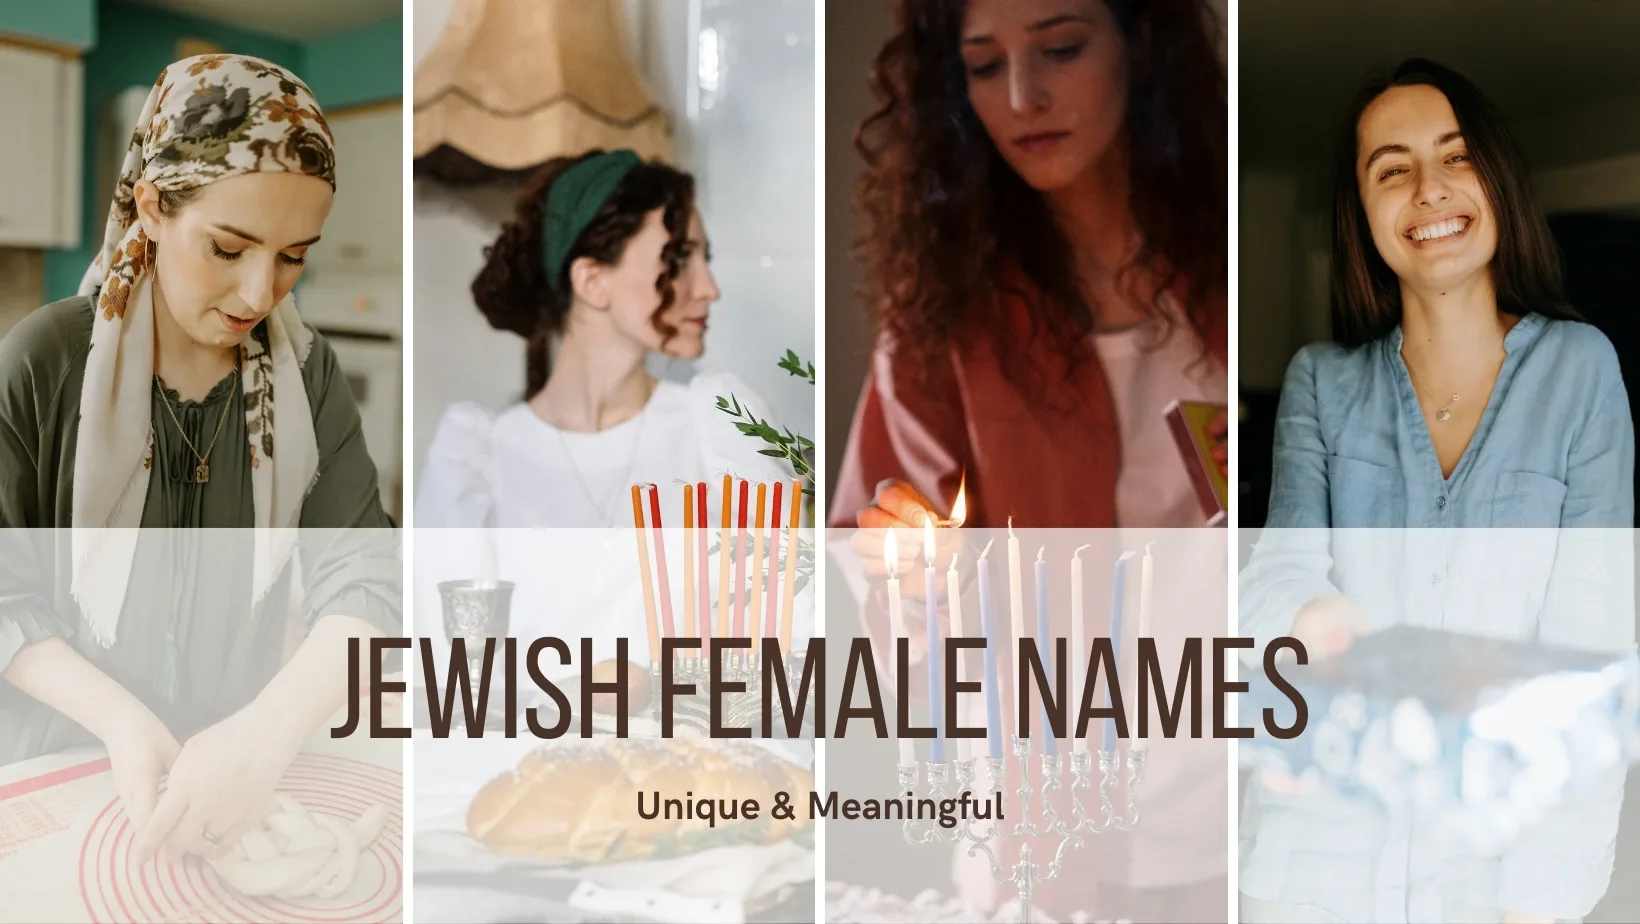 Jewish girl names